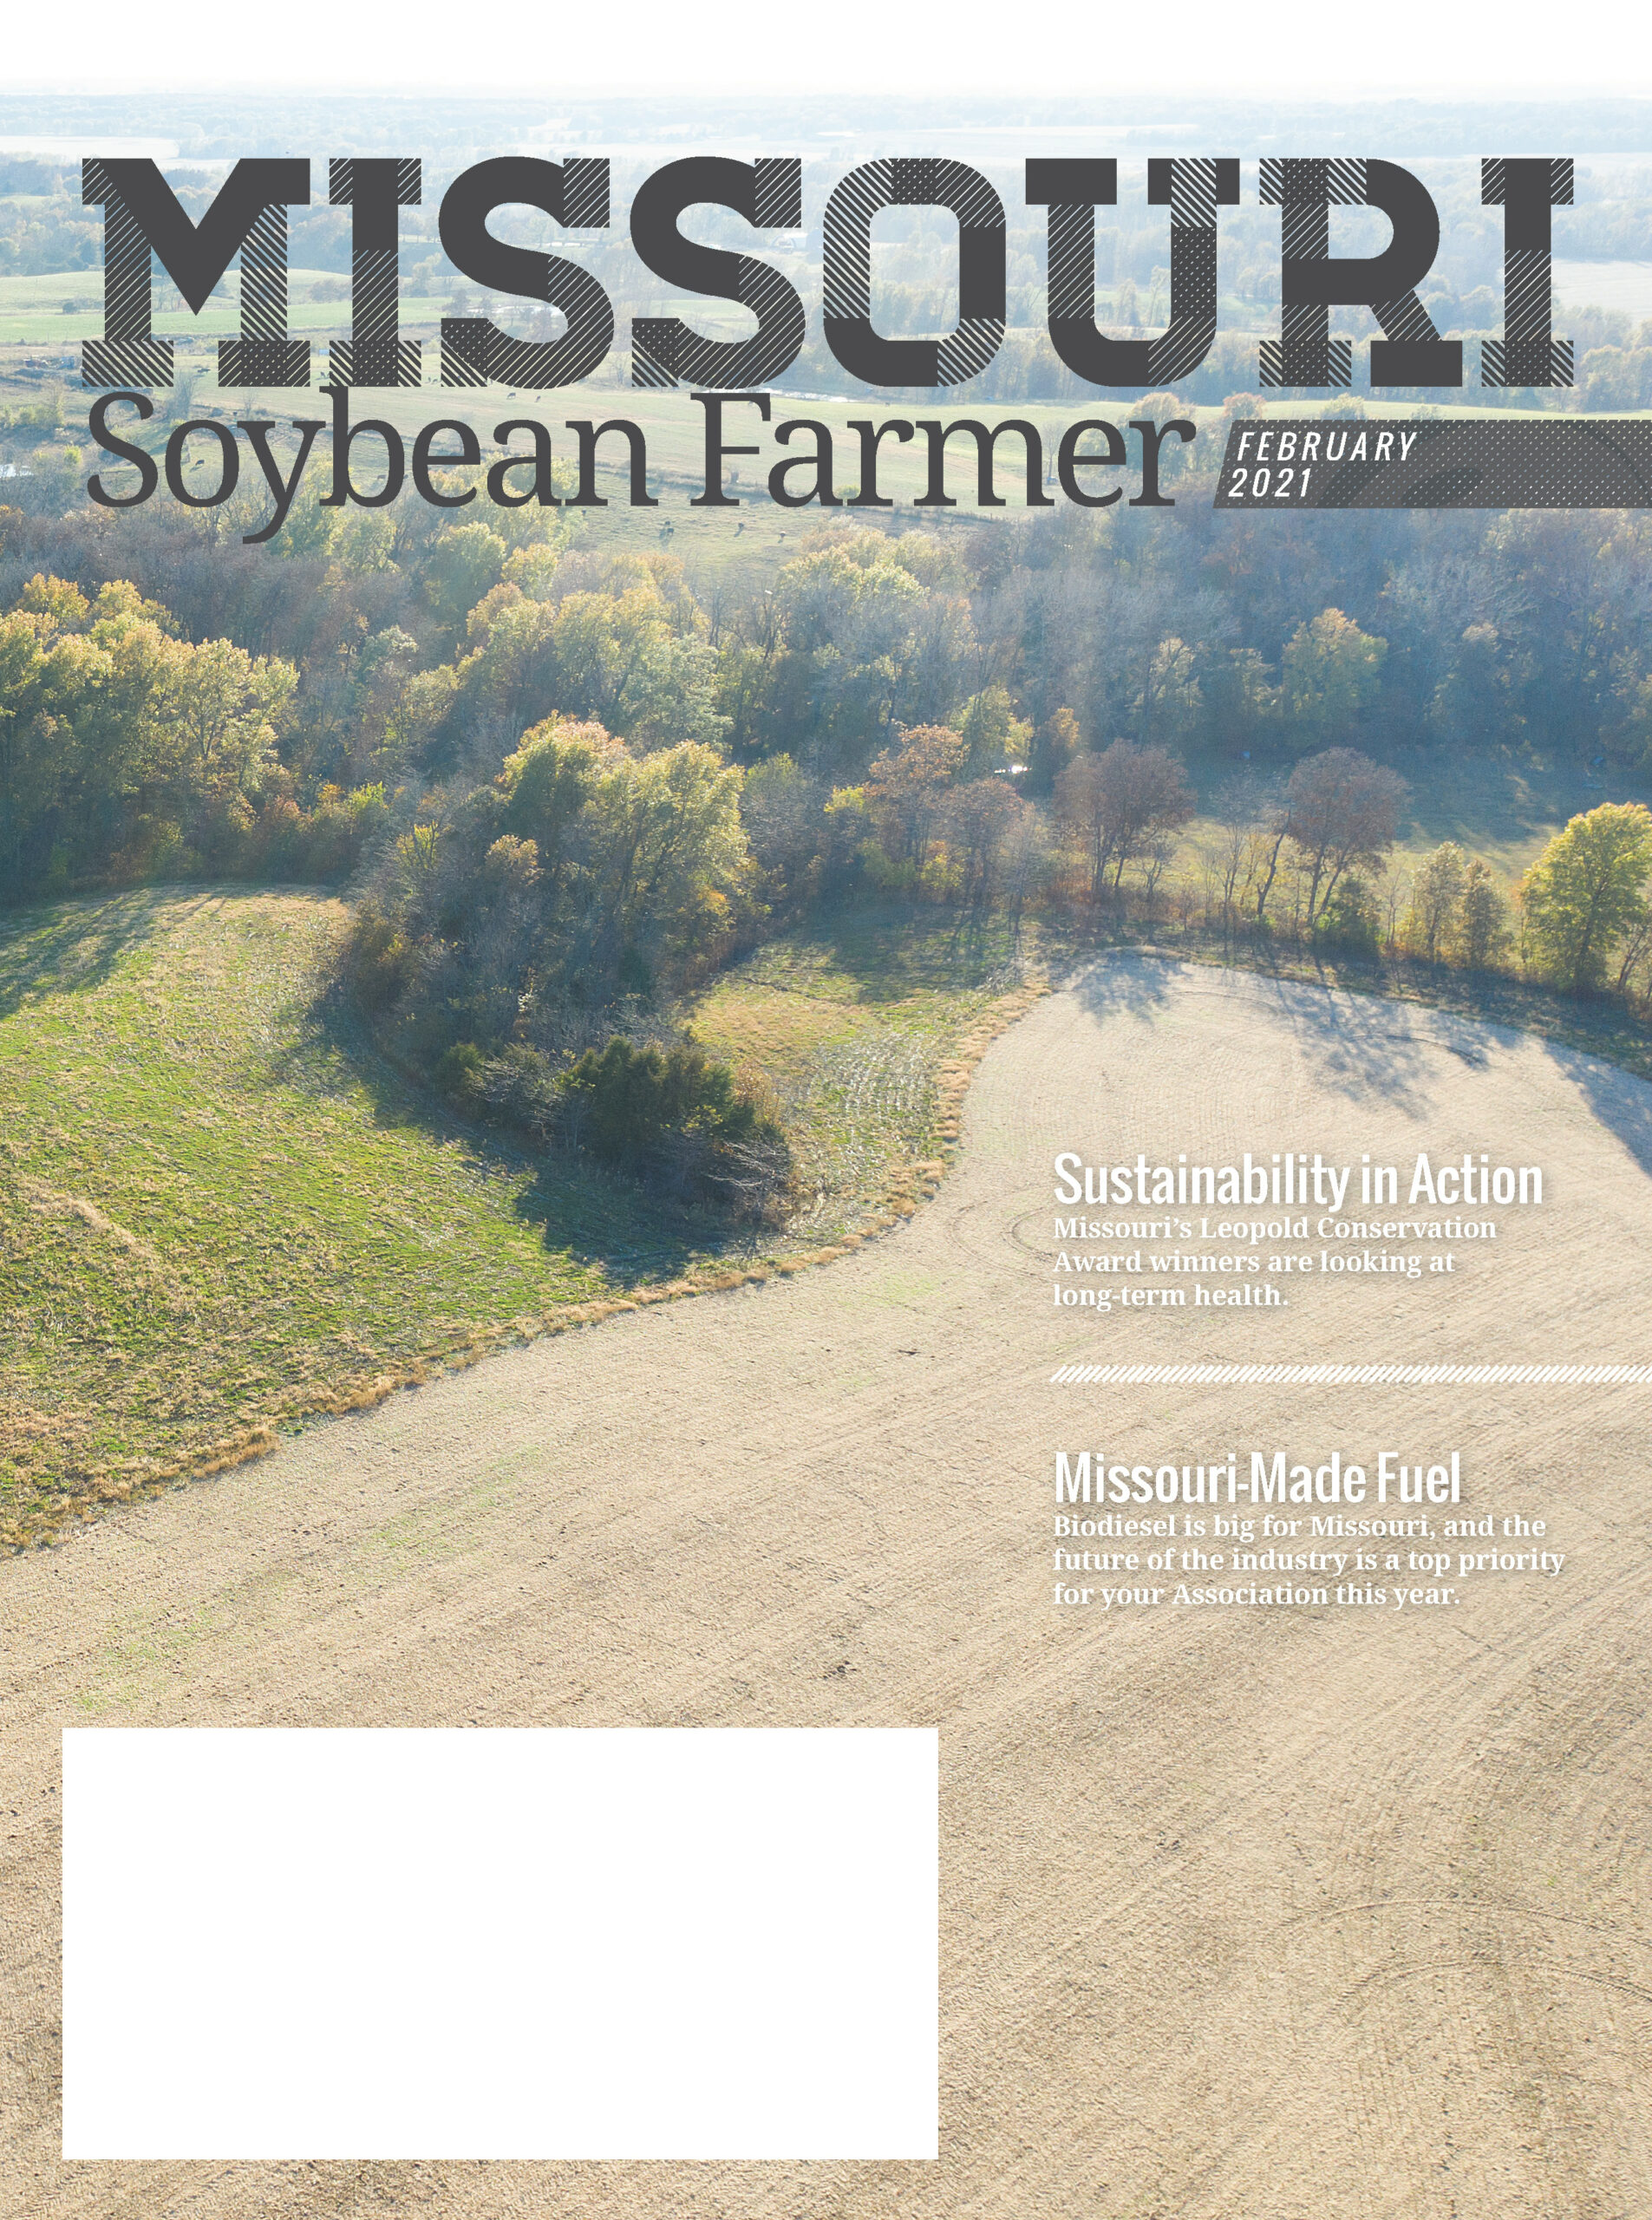 Missouri Soybean Farmer Magazine – February 2021 Issue